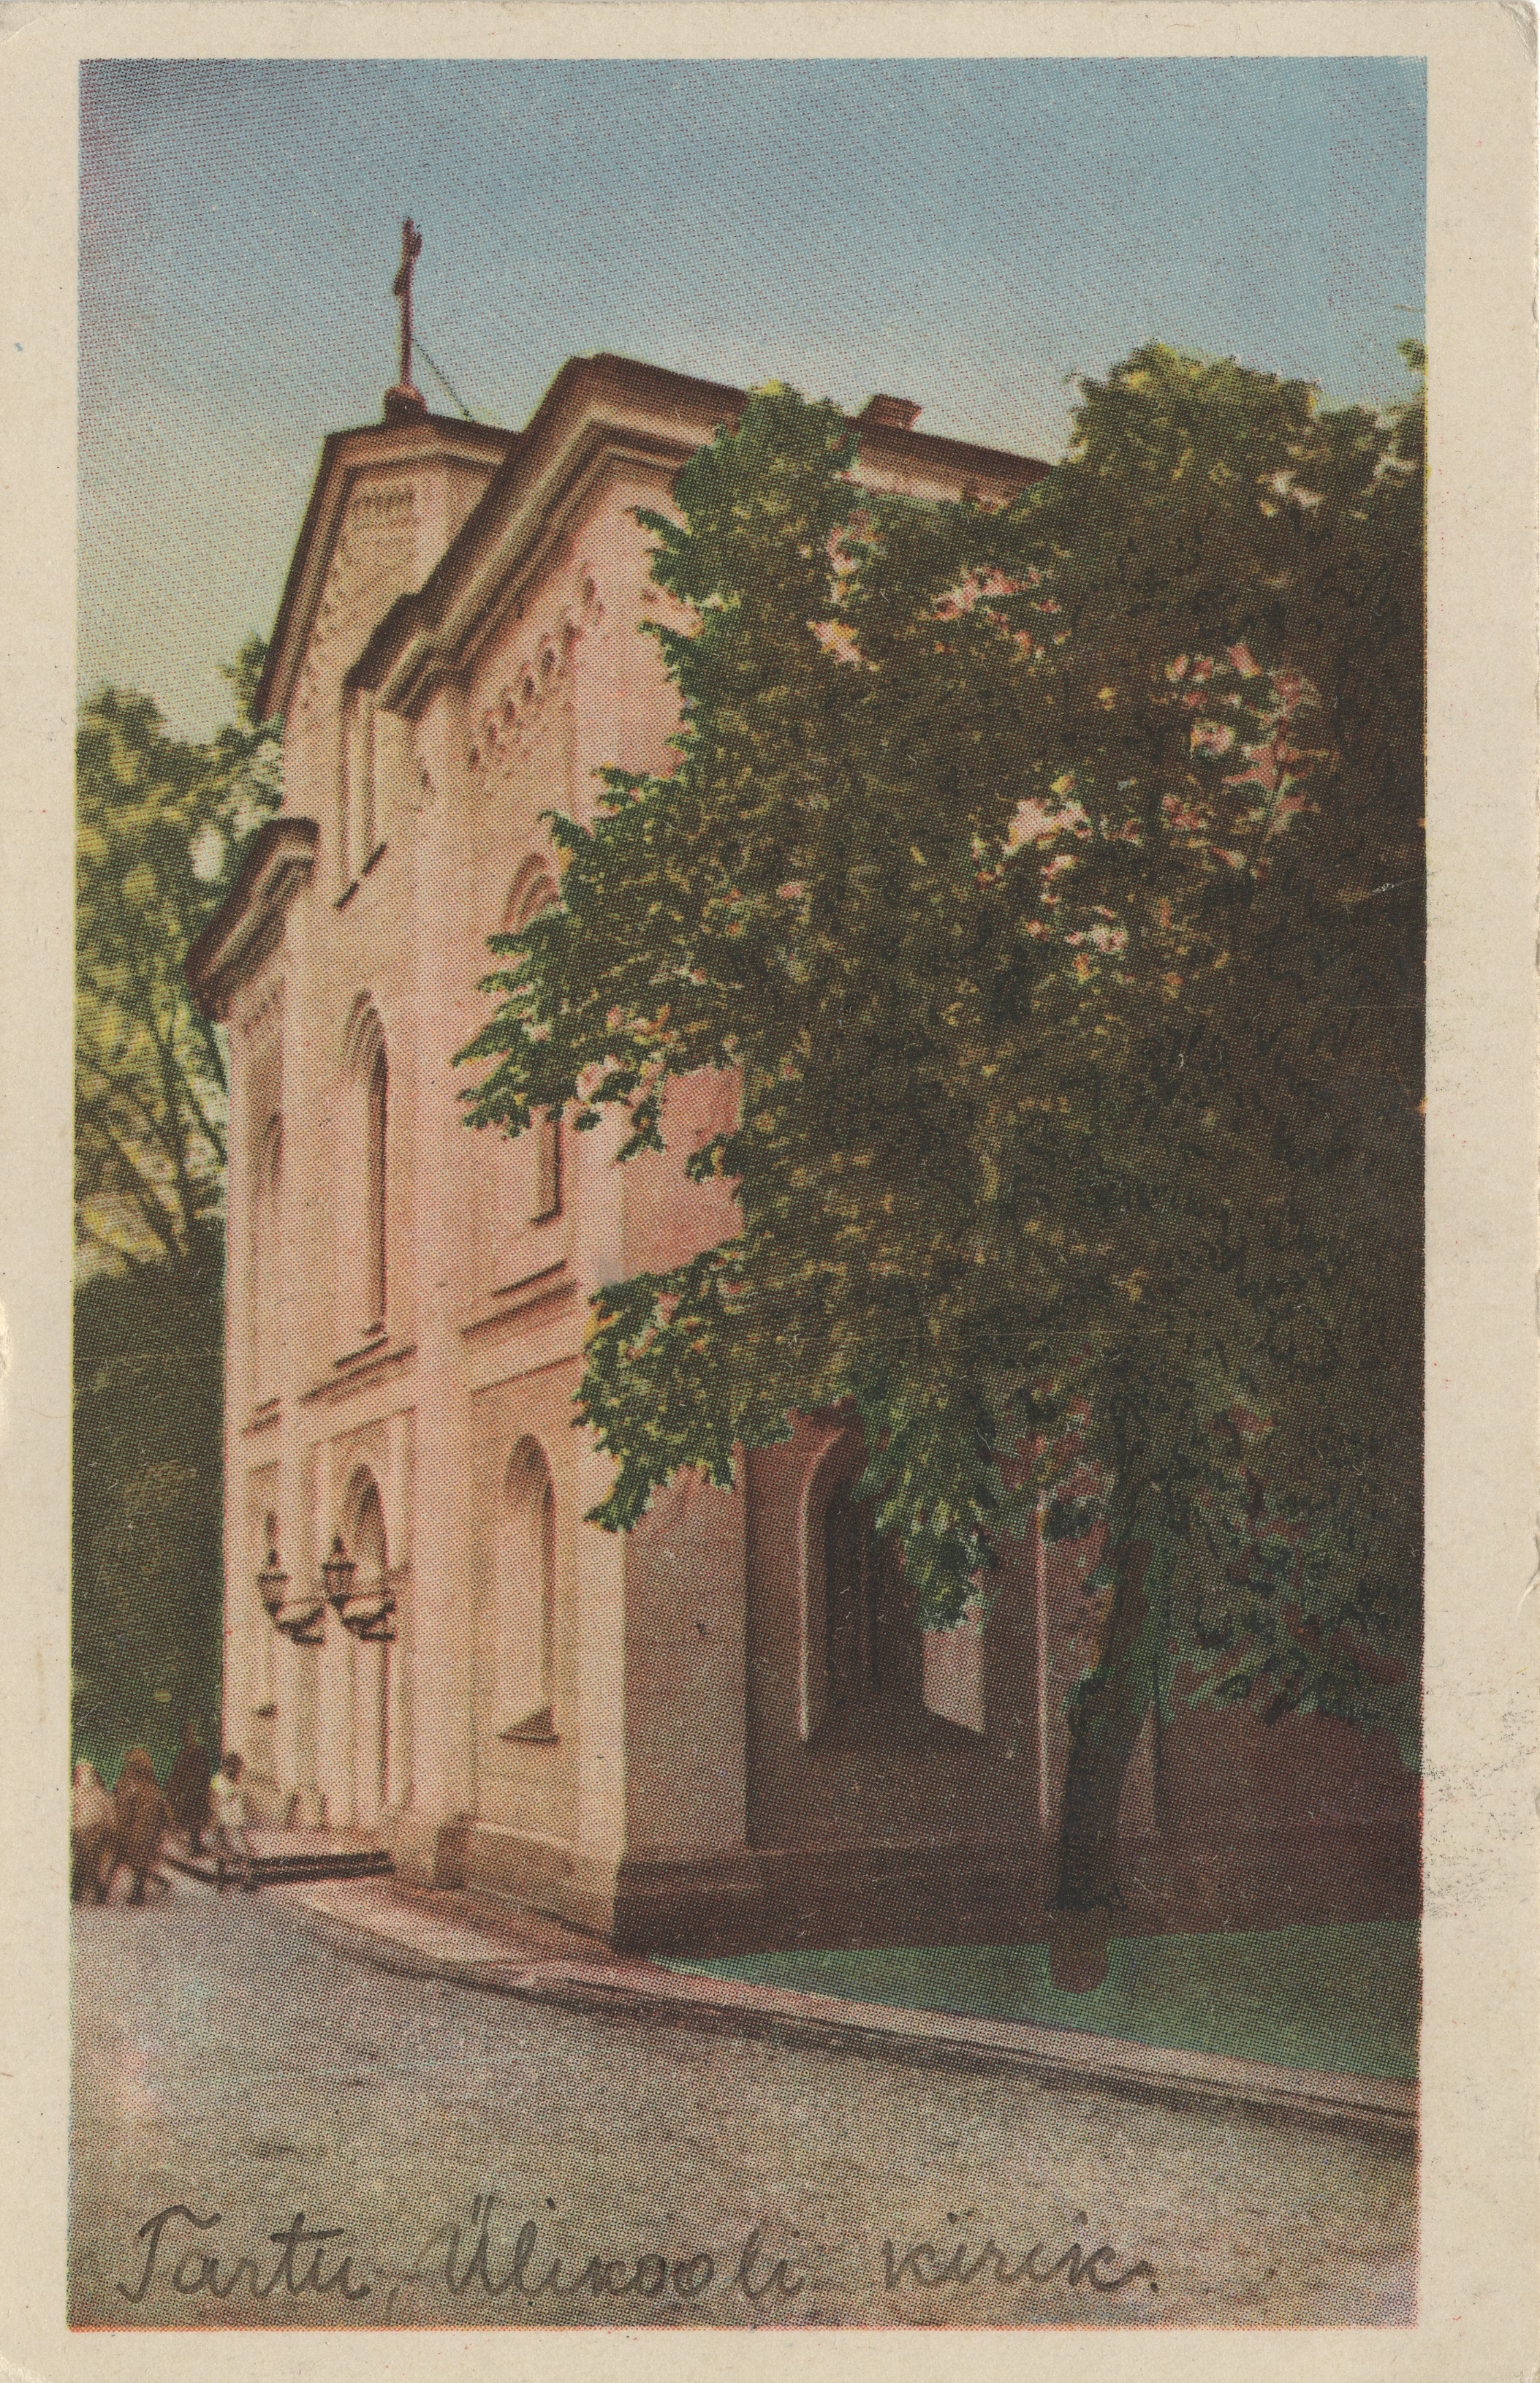 Church of the University of Tartu